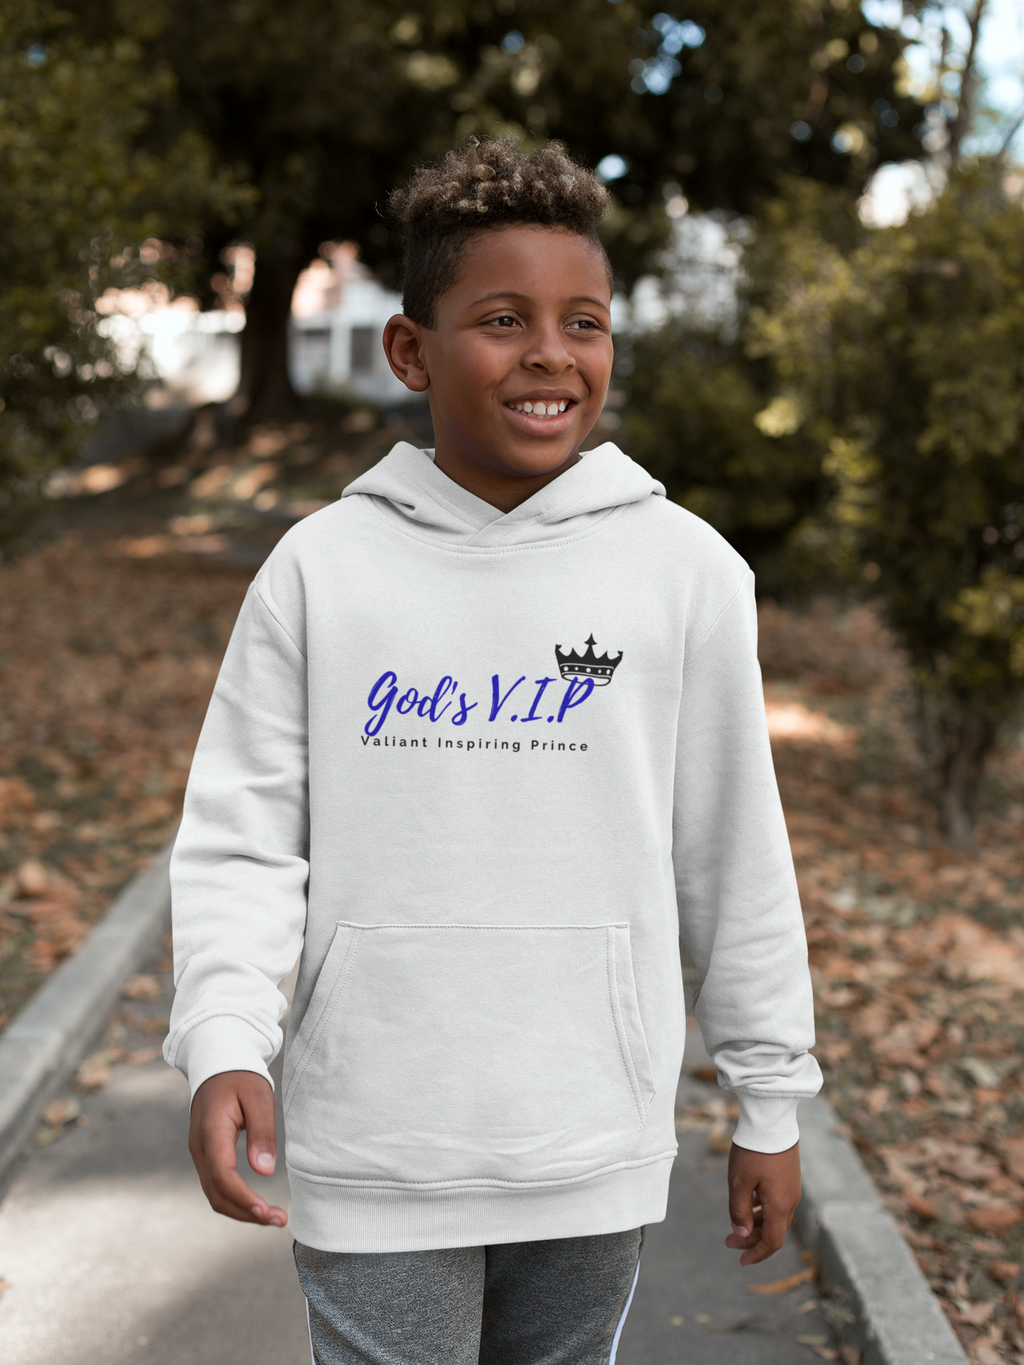 God's V.I.P. Boy's Youth Pullover Hoodie (Blue Lettering)